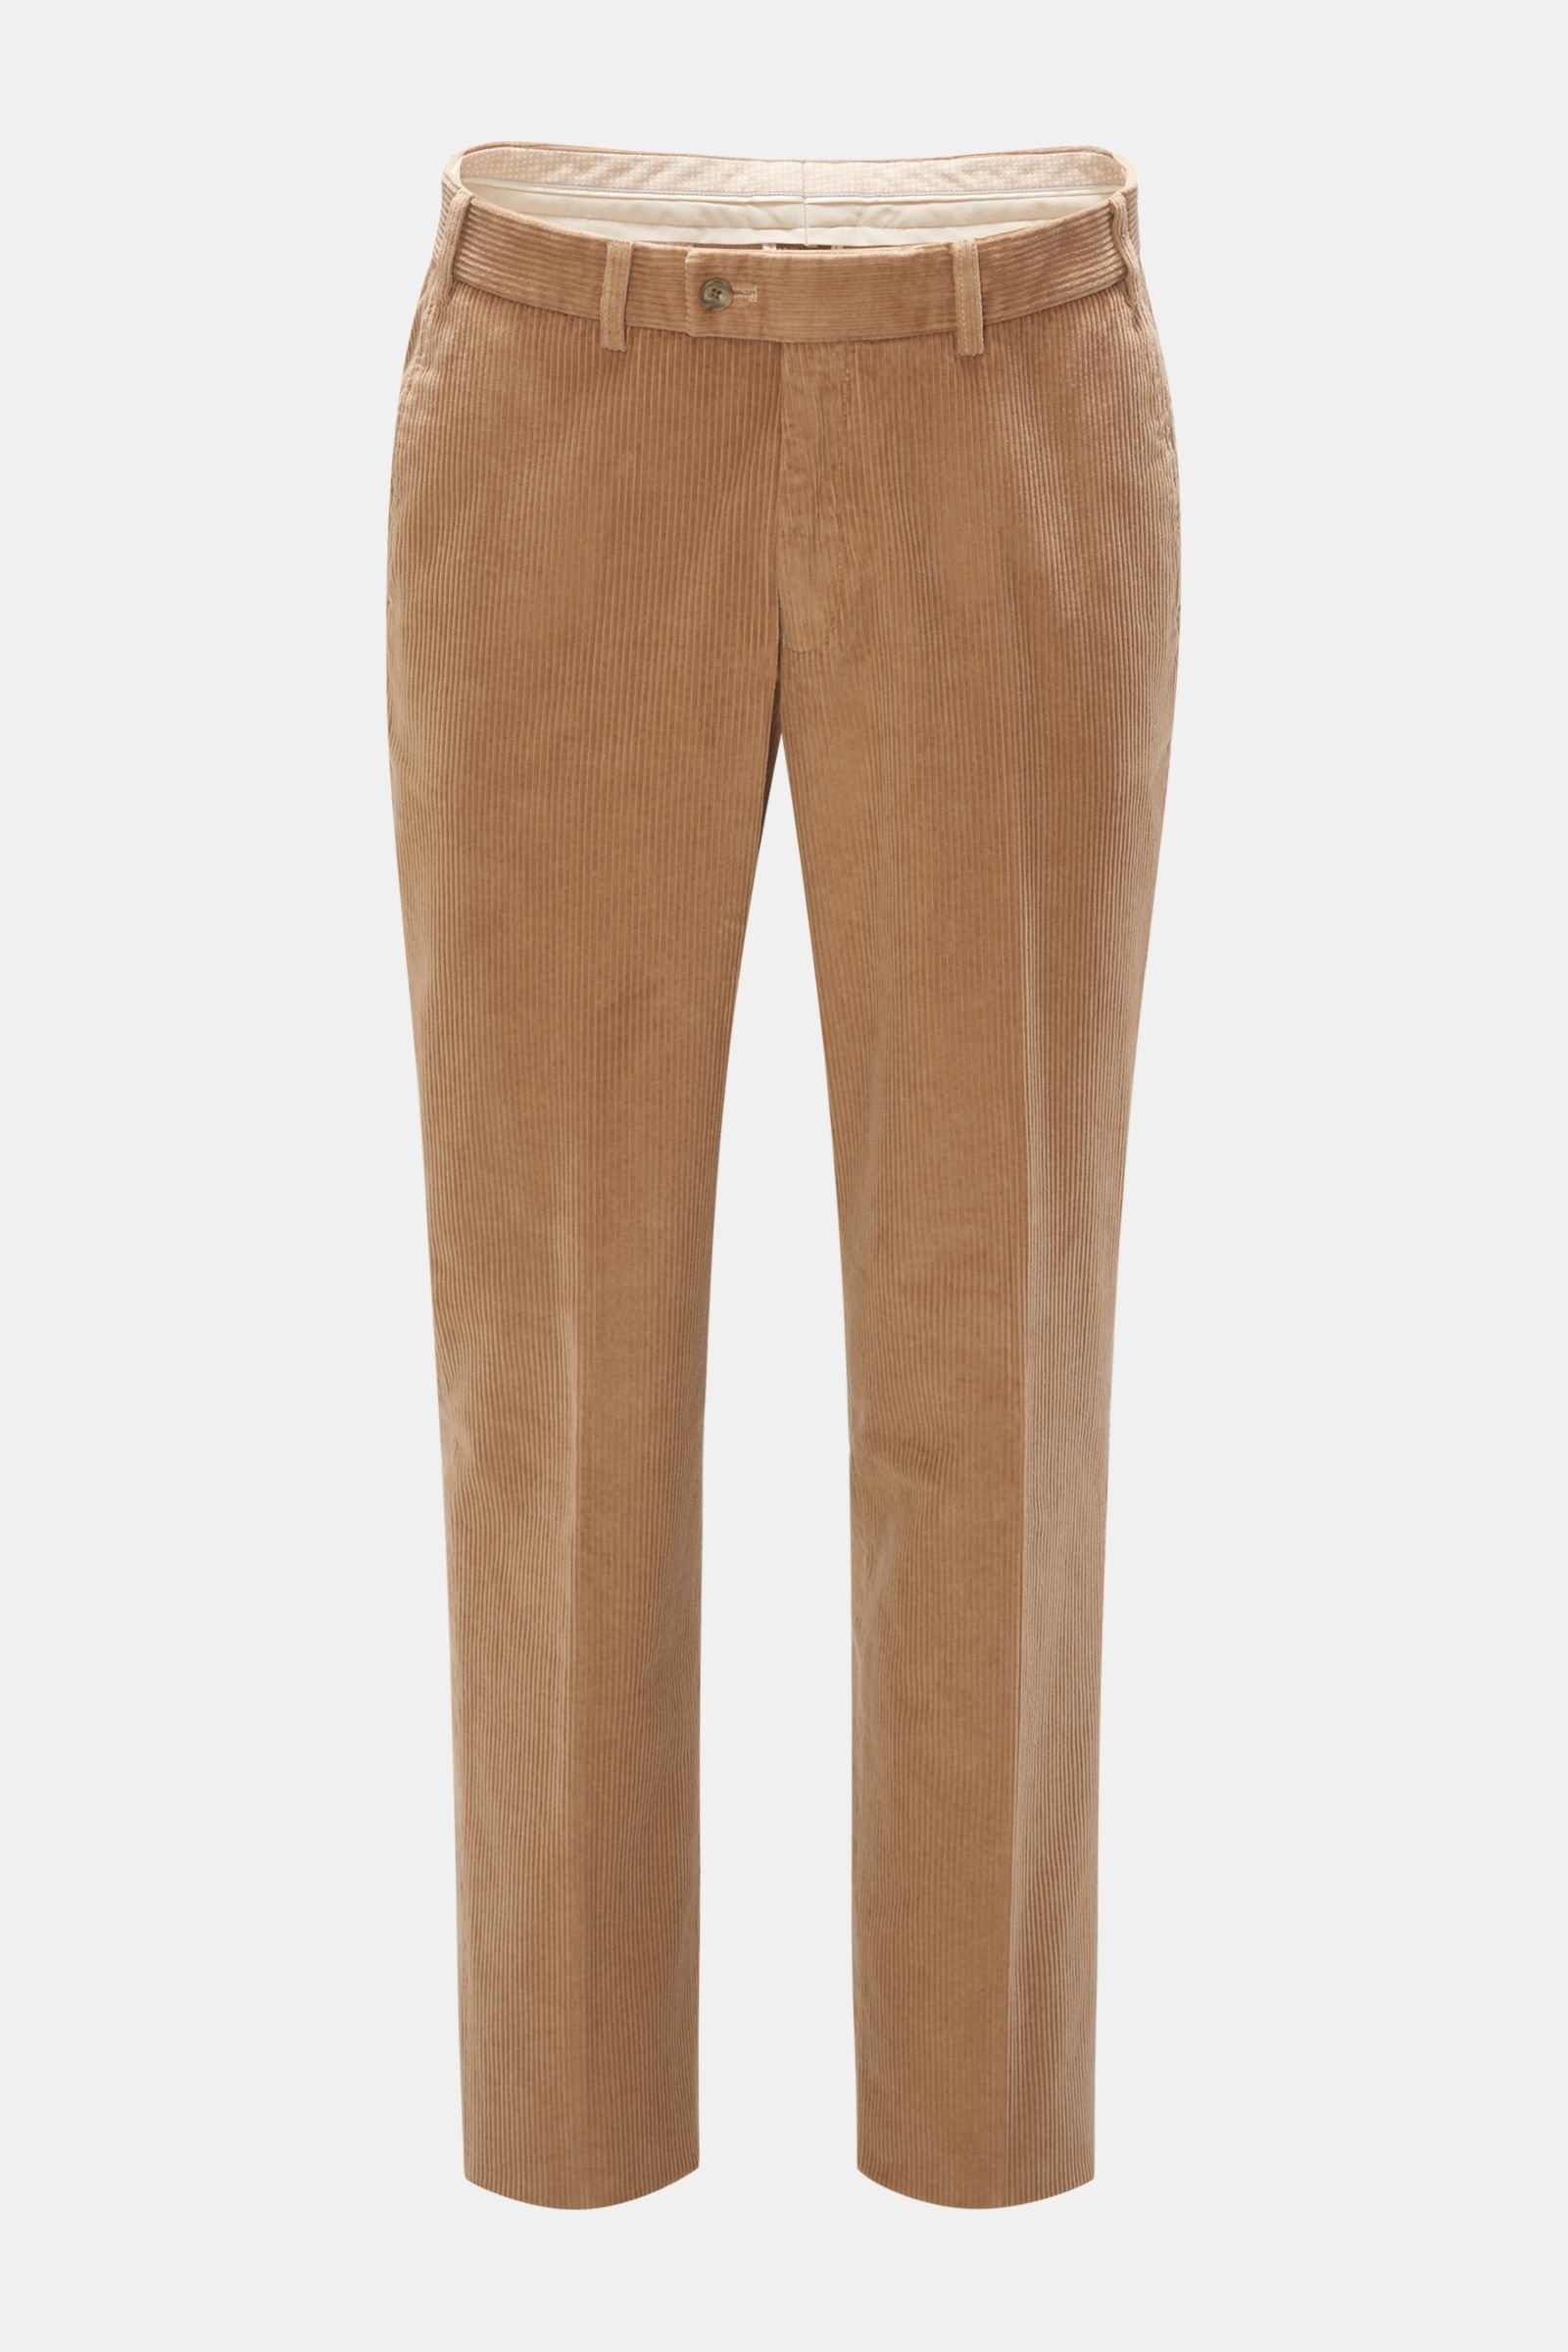 Corduroy trousers 'Parma' light brown